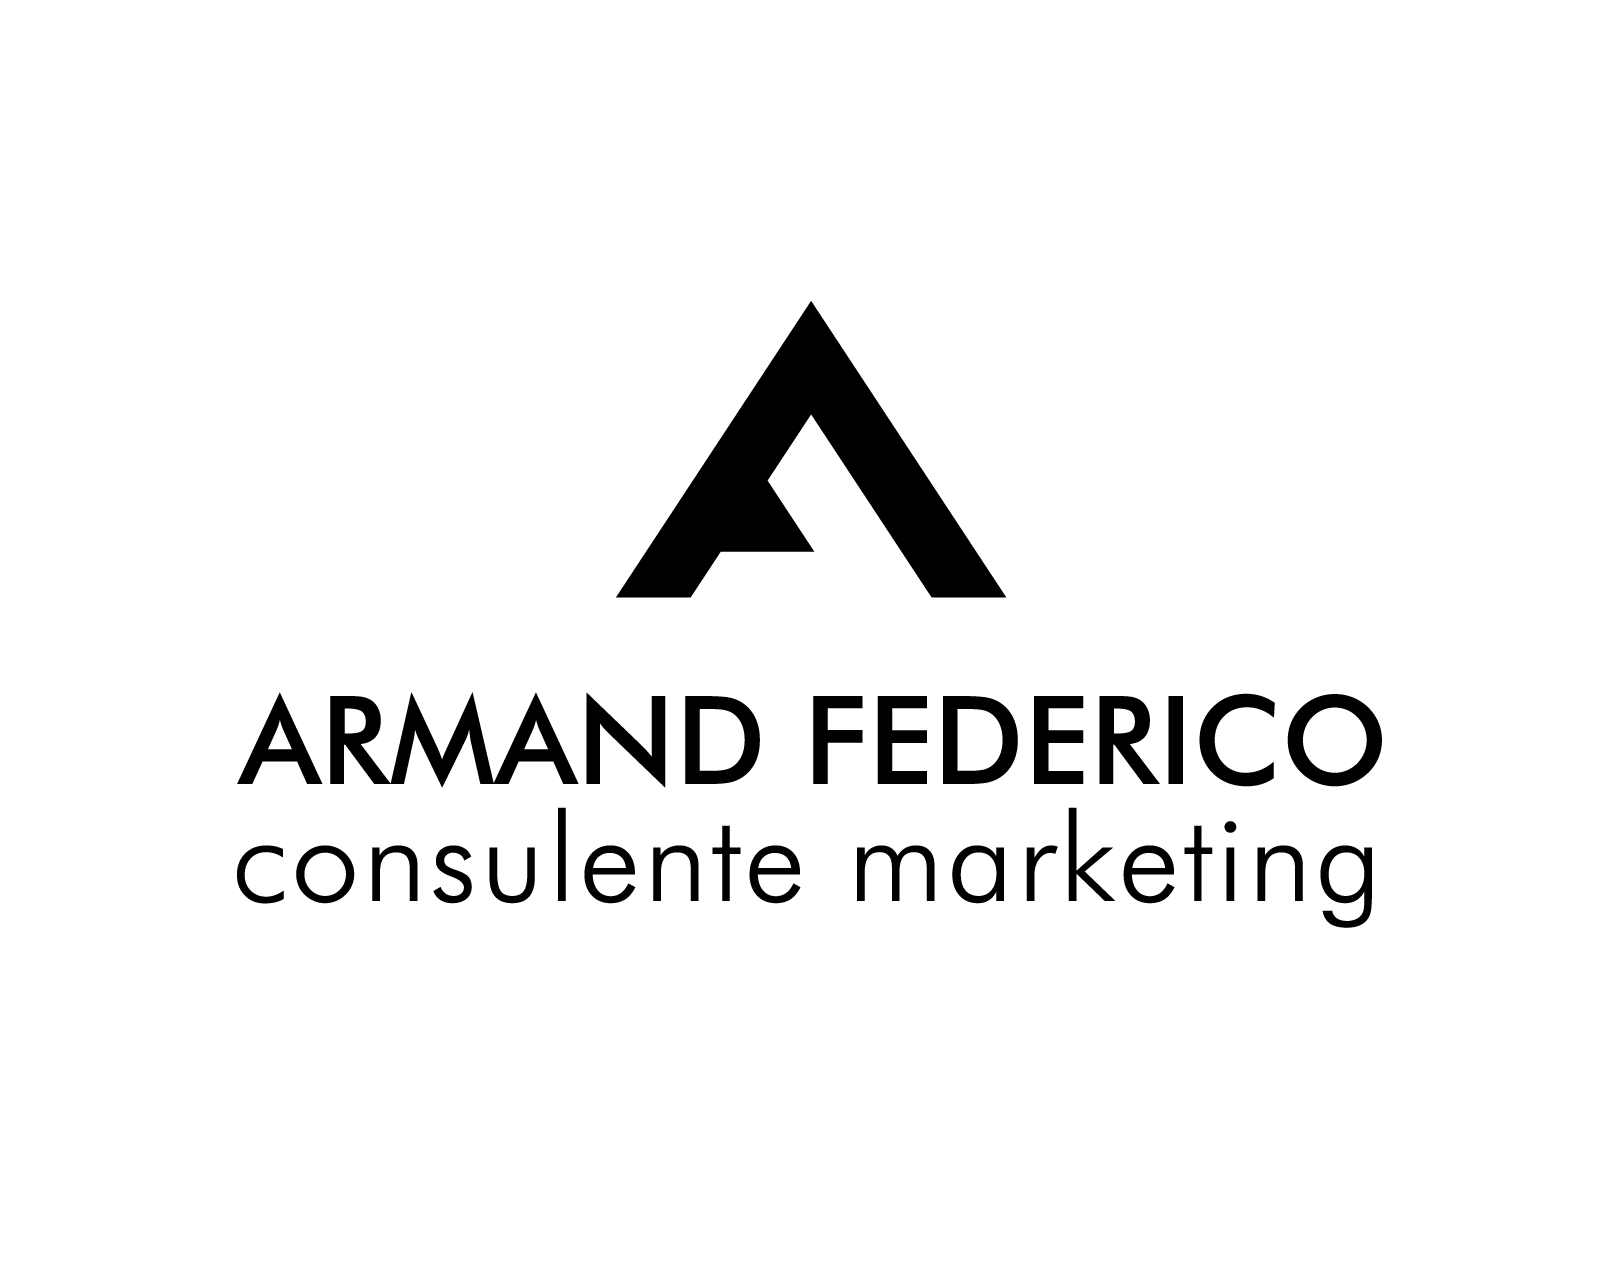 ARMAND FEDERICO